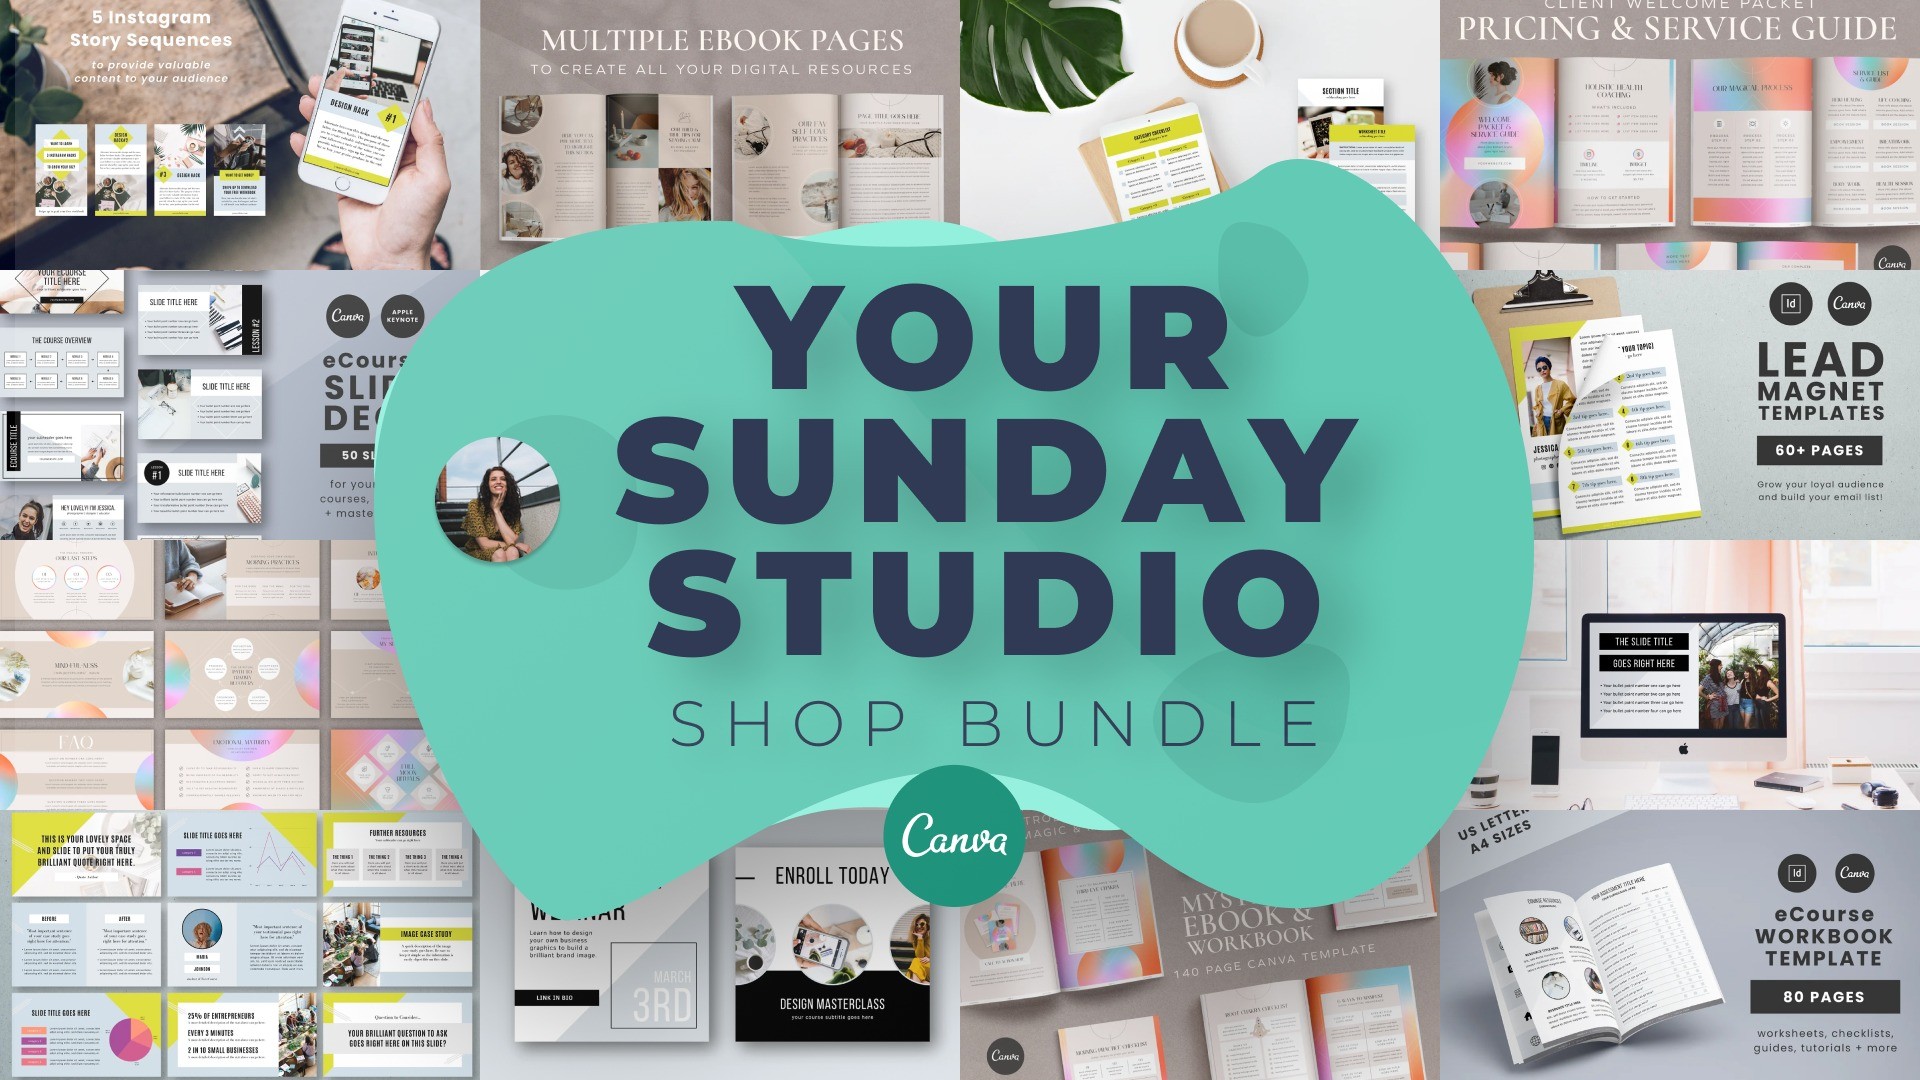 Your Sunday Studio Shop Bundle